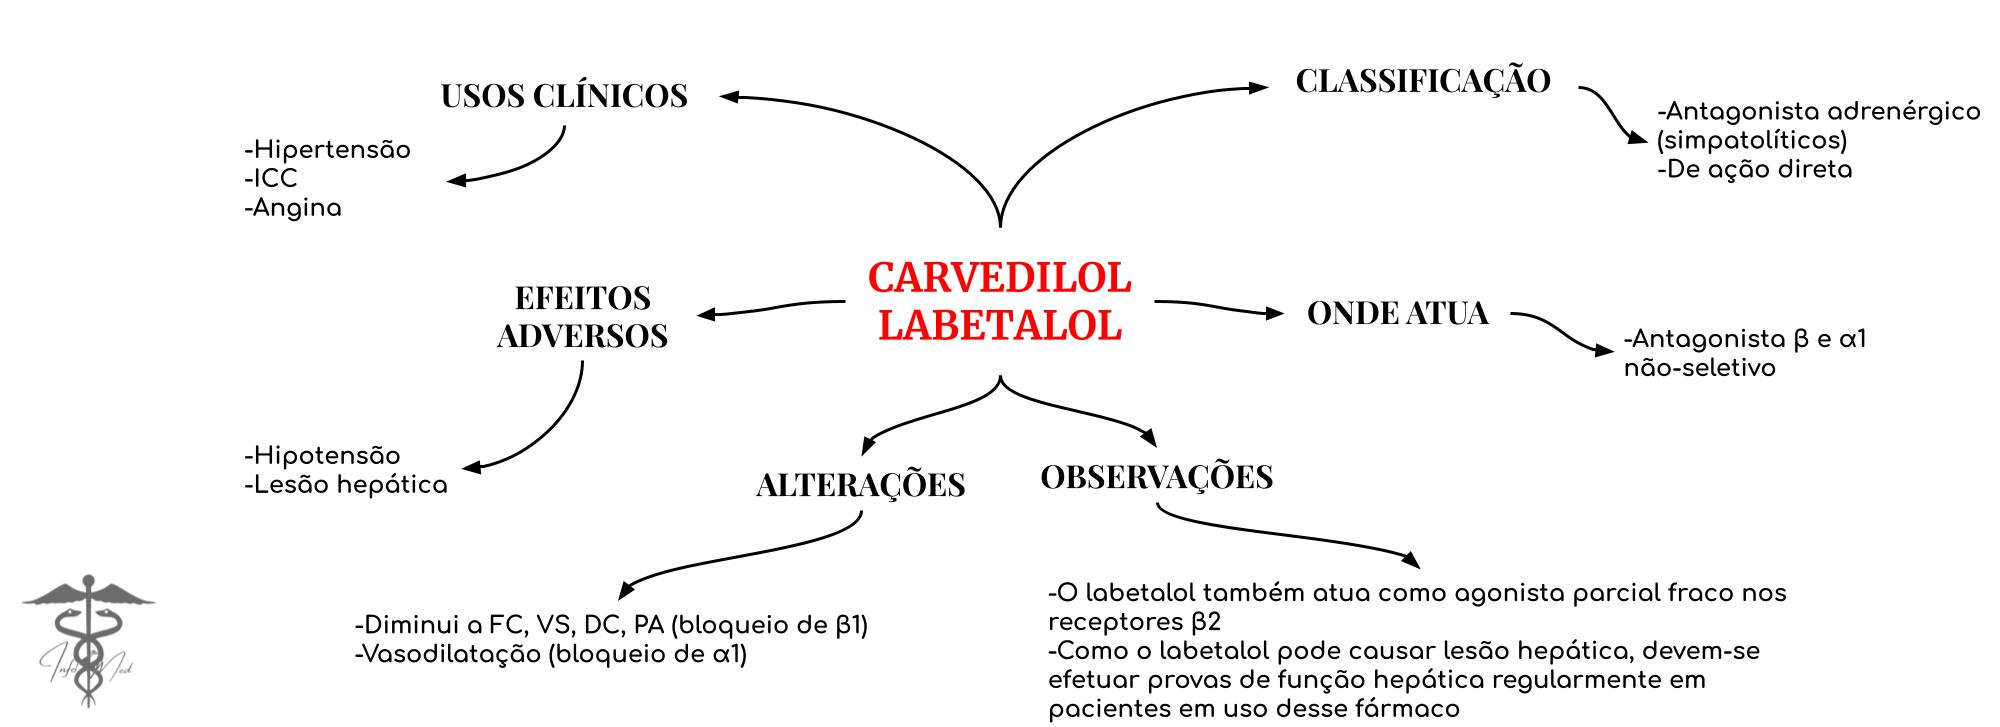 Labetalol and carvedilol